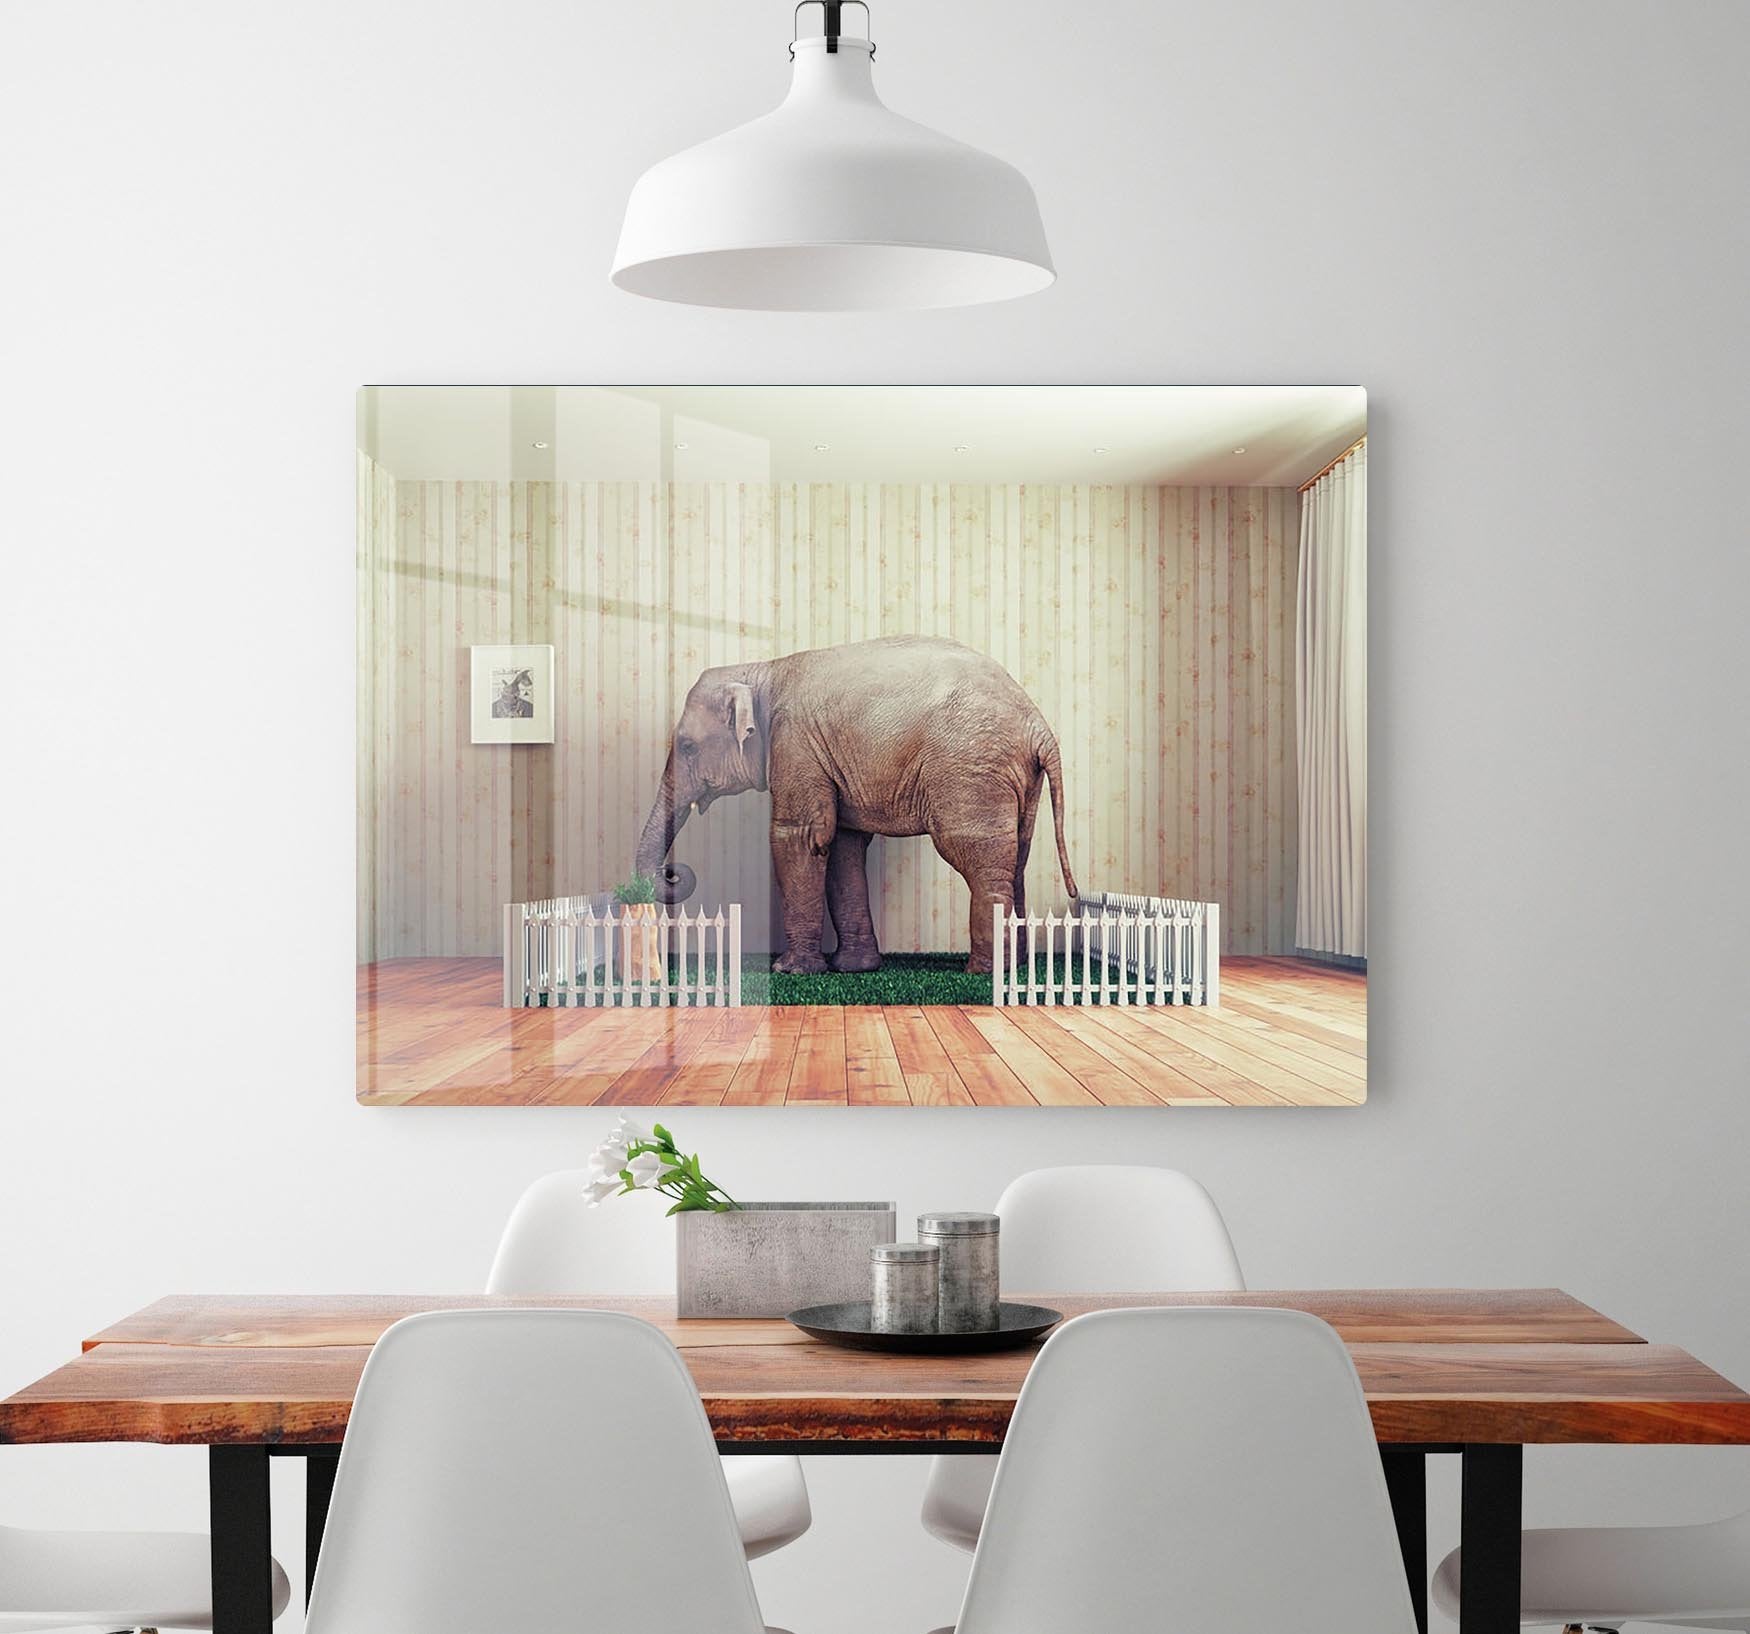 An Elephant calf as the pet HD Metal Print - Canvas Art Rocks - 2